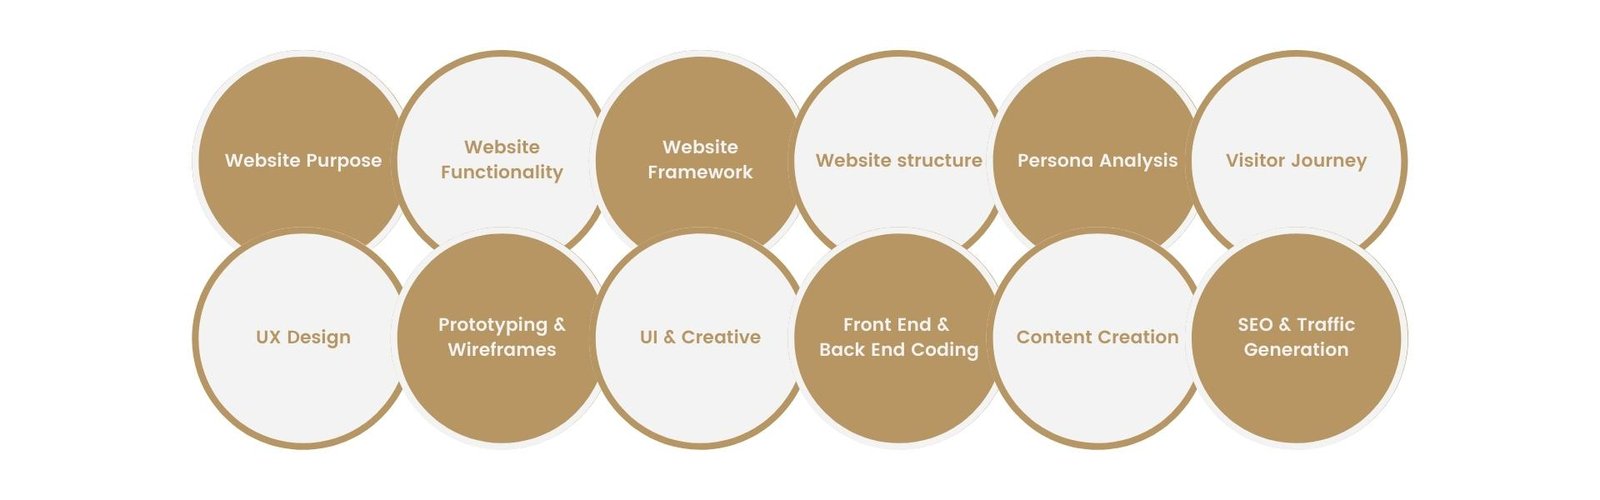 Website Design Methodology